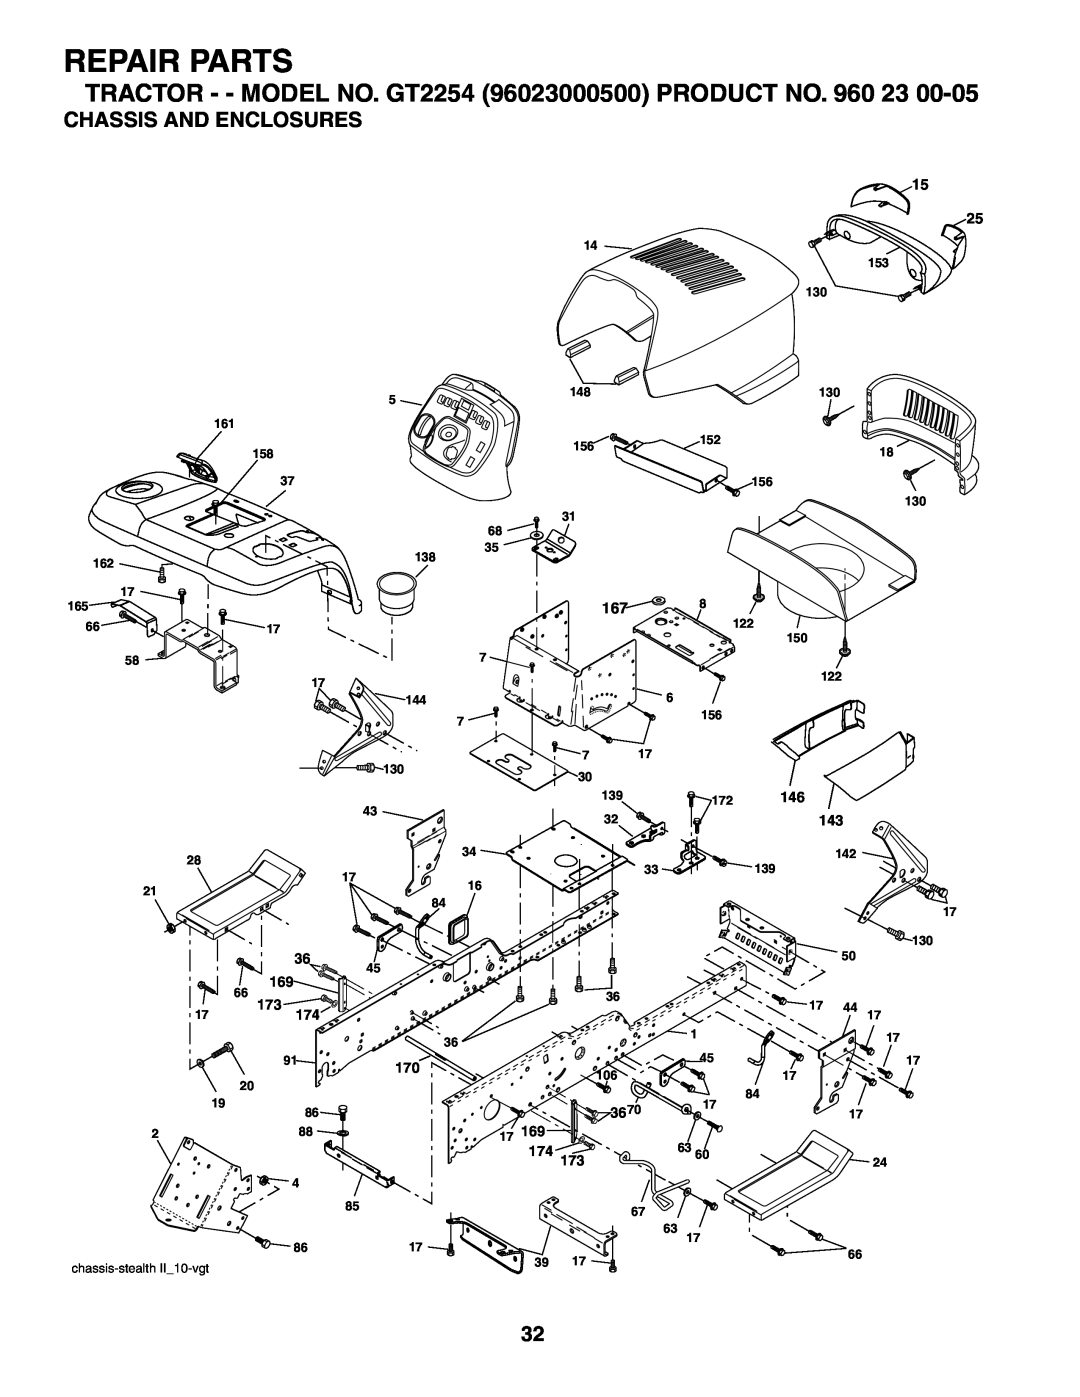 Husqvarna Chassis And Enclosures, Repair Parts, TRACTOR - - MODEL NO. GT2254 96023000500 PRODUCT NO. 960 23, 153 130 